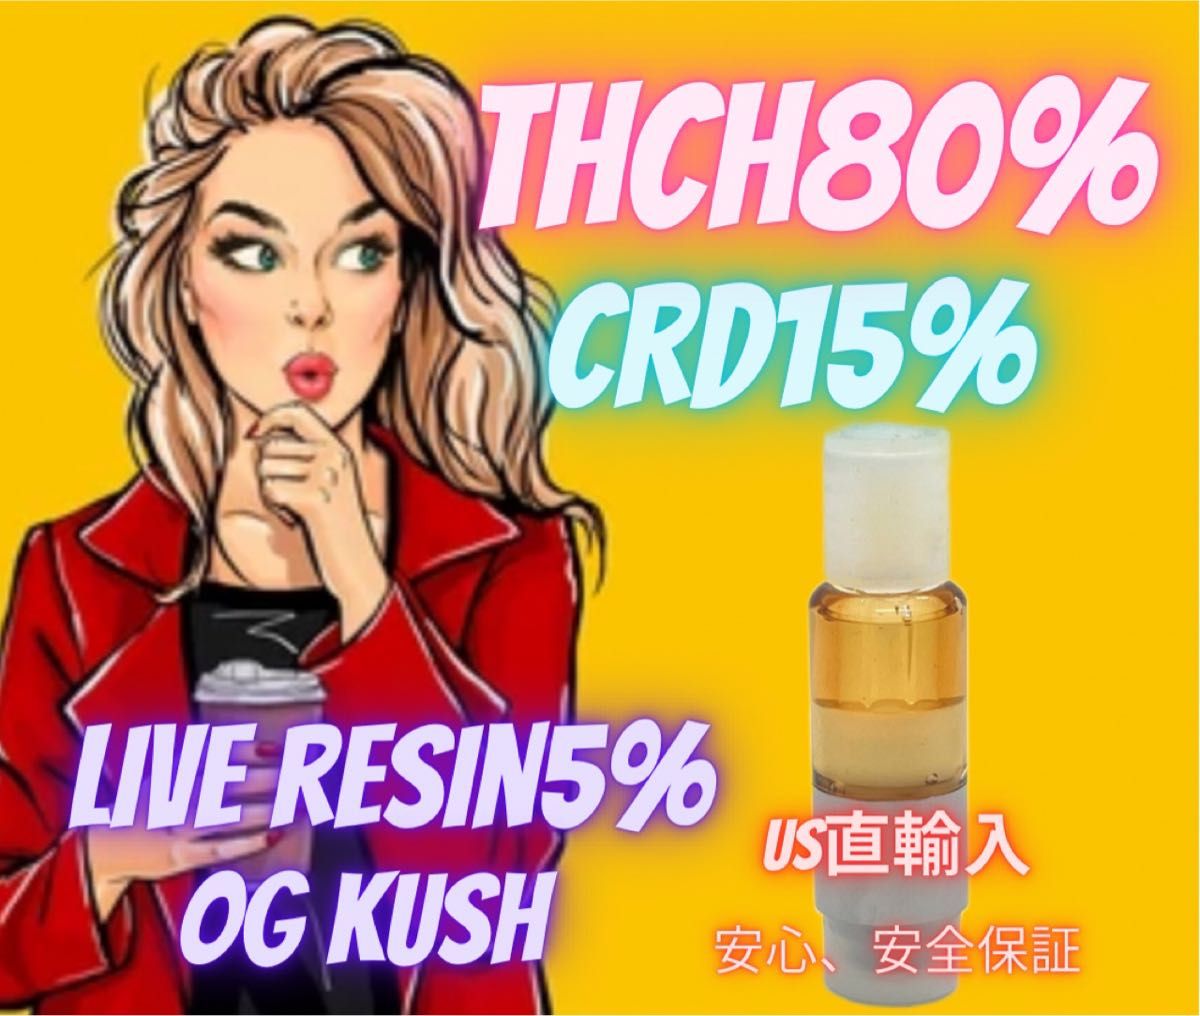 THCH80% LIQUID